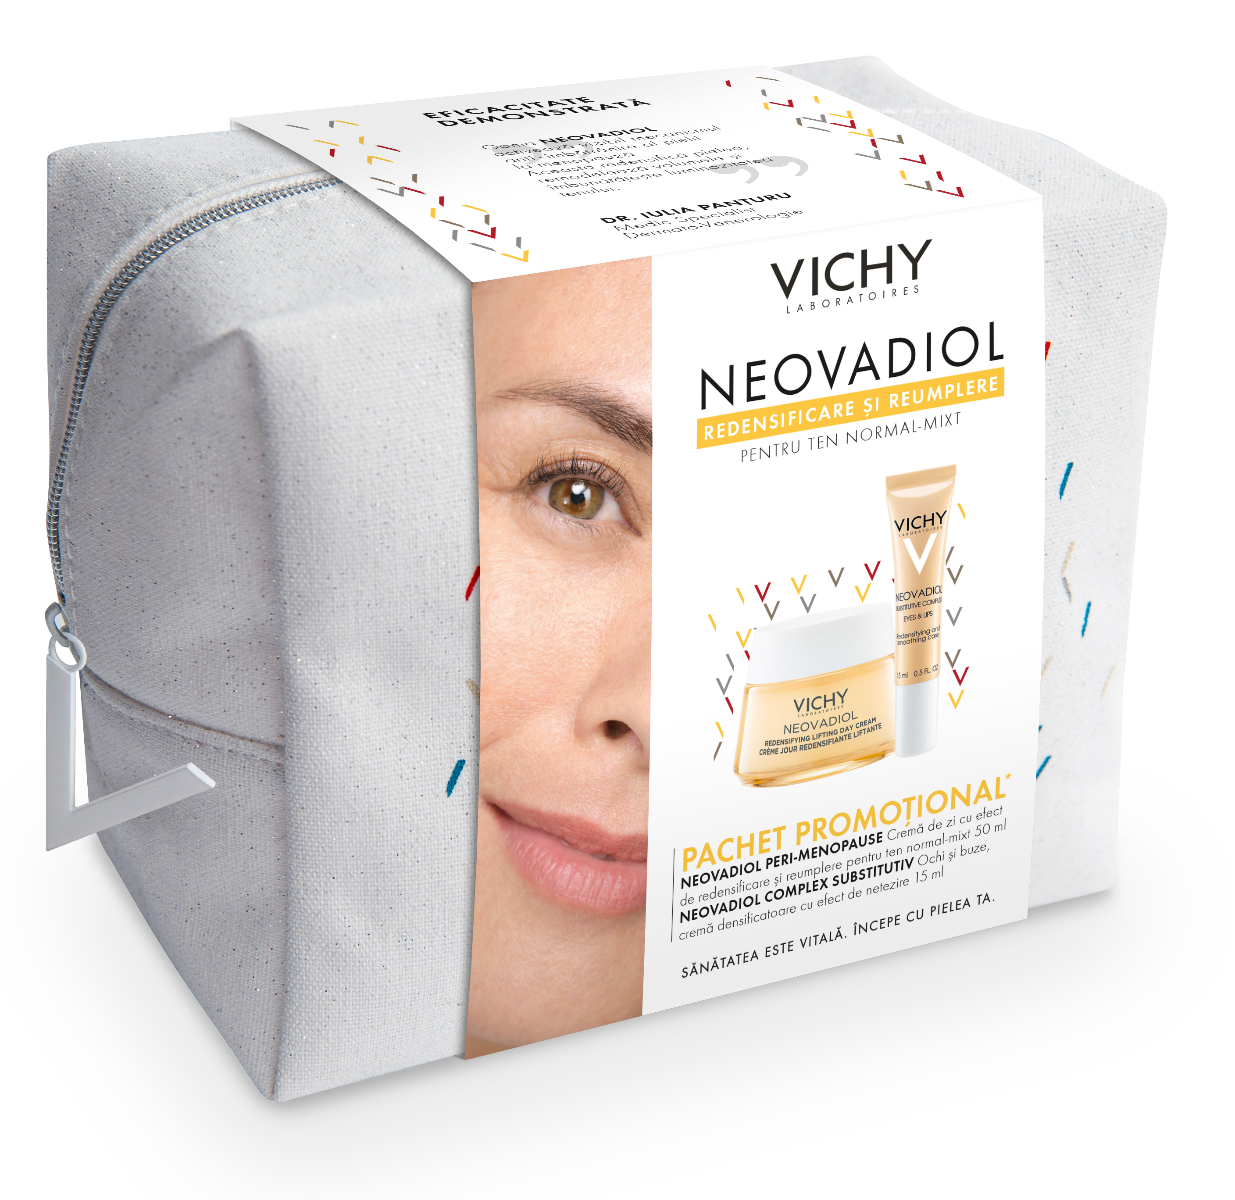 Pachet Promotional Neovadiol Peri-Menopauza pentru ten normal-mixt 50ml + Crema contur ochi si buze Neovadiol 15ml, Vichy